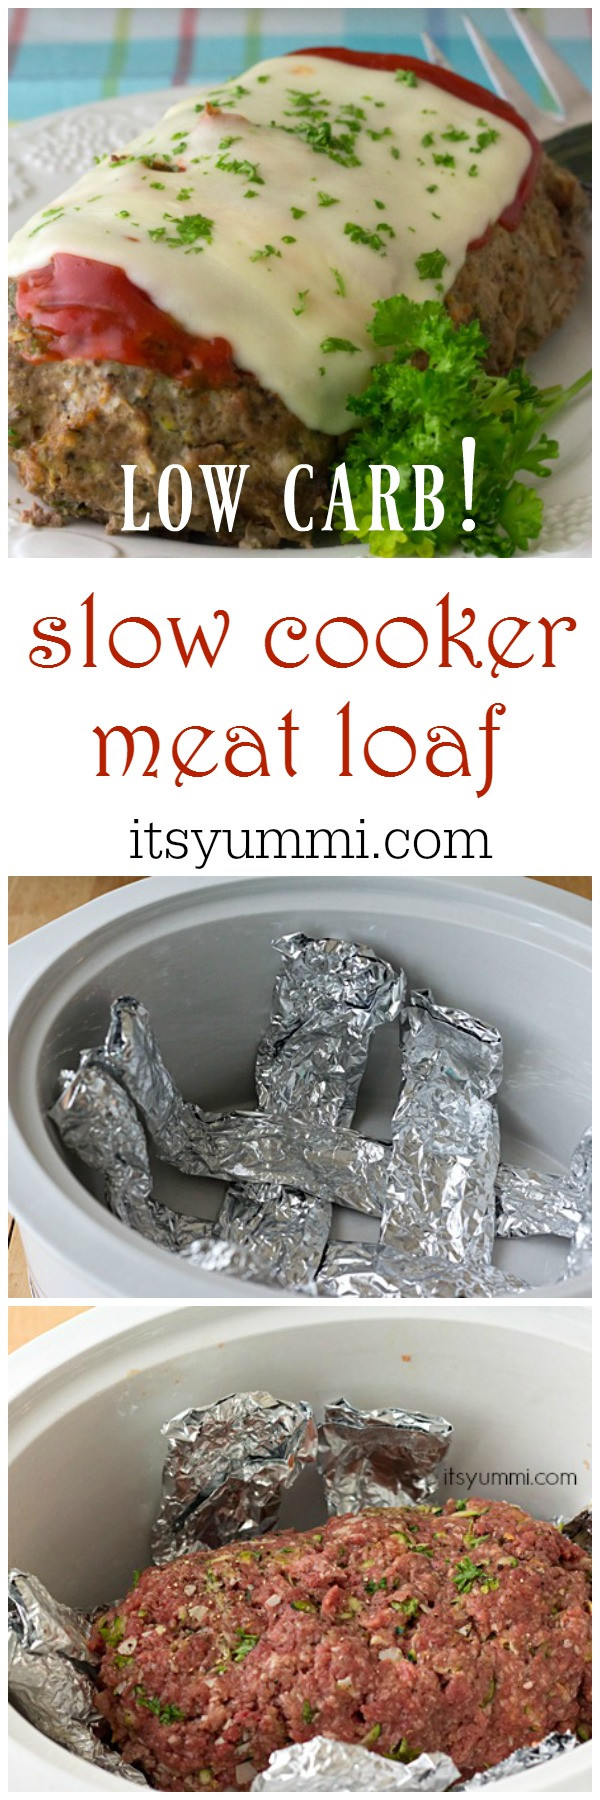 Slow Cooker Meatloaf Recipes
 Low Carb Slow Cooker Meatloaf Recipe